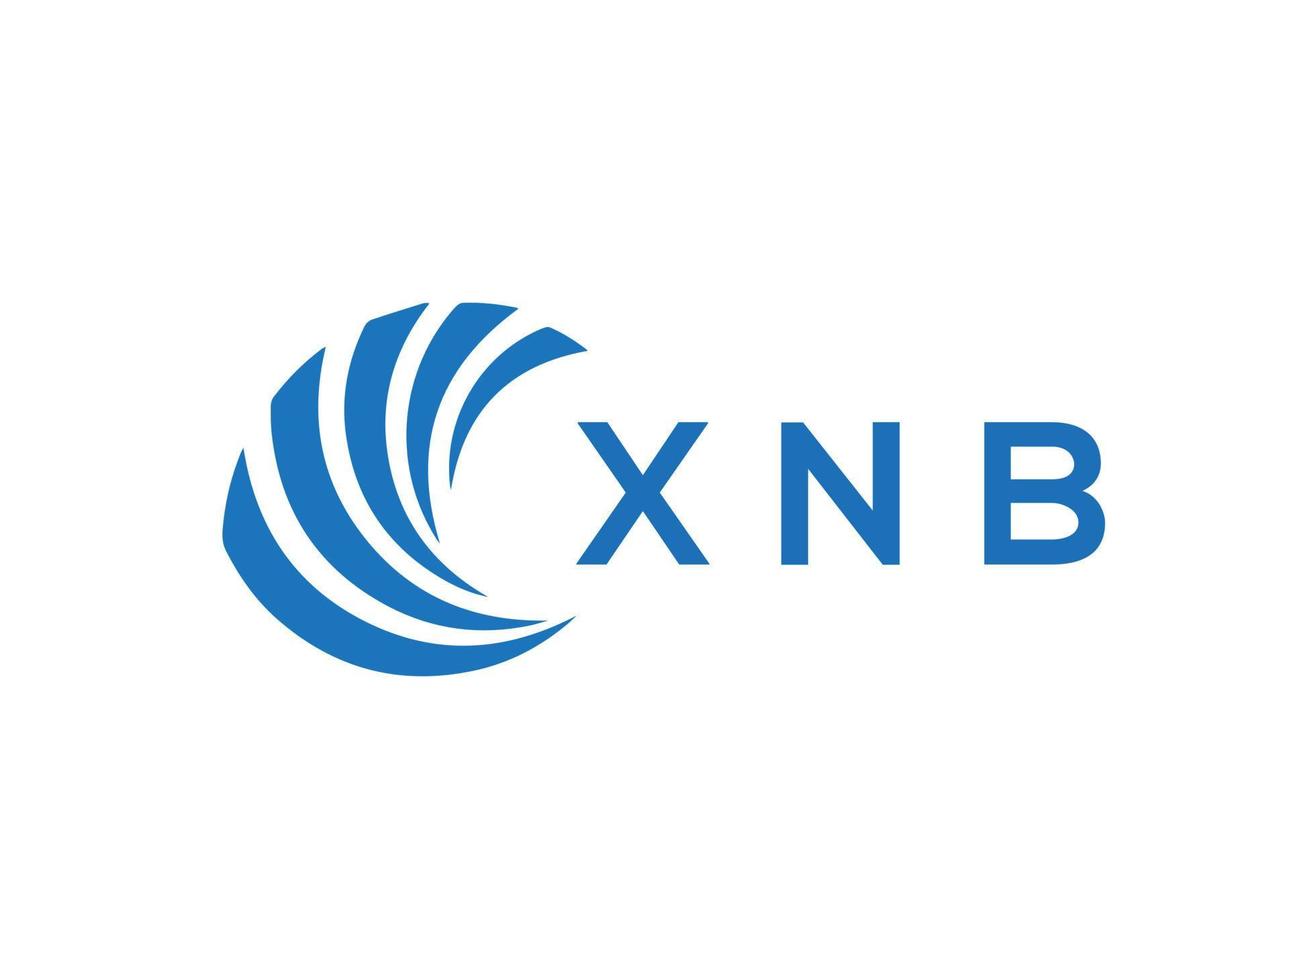 xnb brief logo ontwerp Aan wit achtergrond. xnb creatief cirkel brief logo concept. xnb brief ontwerp. vector